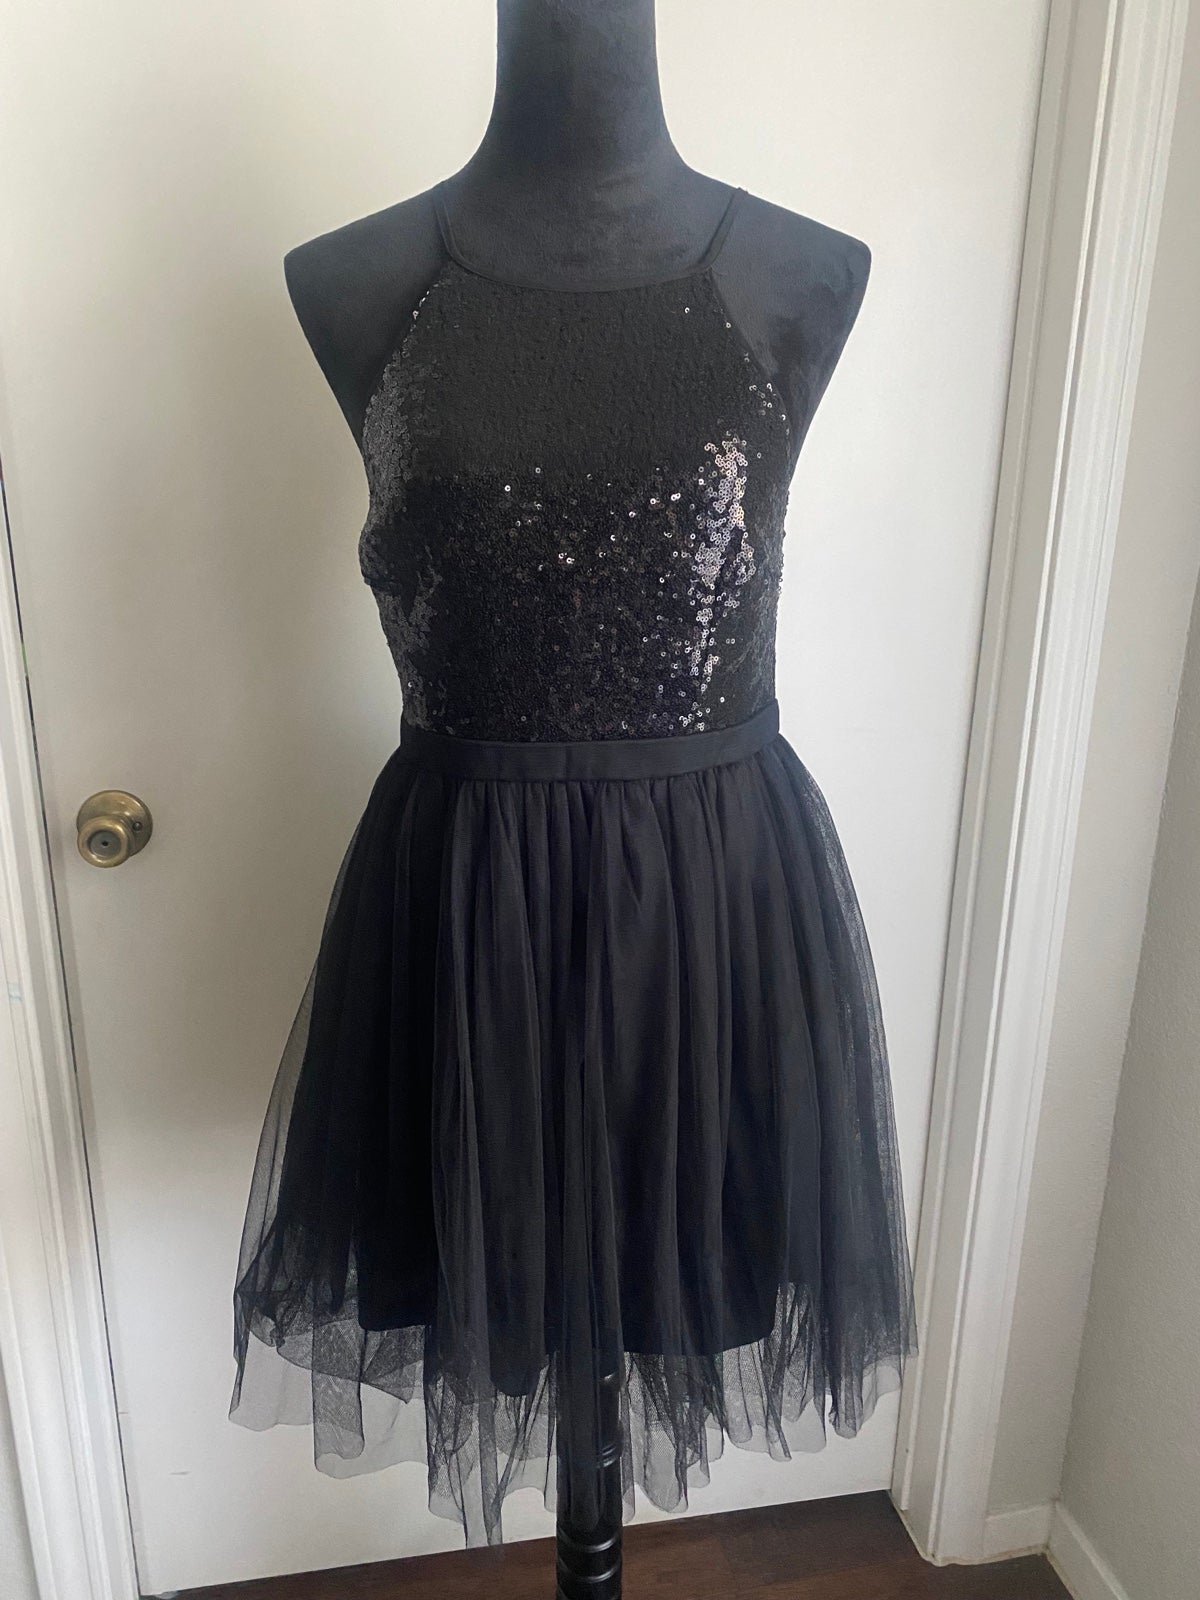 High quality Maniju Black Sequin & Tulle Sleeveless Mini Dress L oi7k2swIV best sale